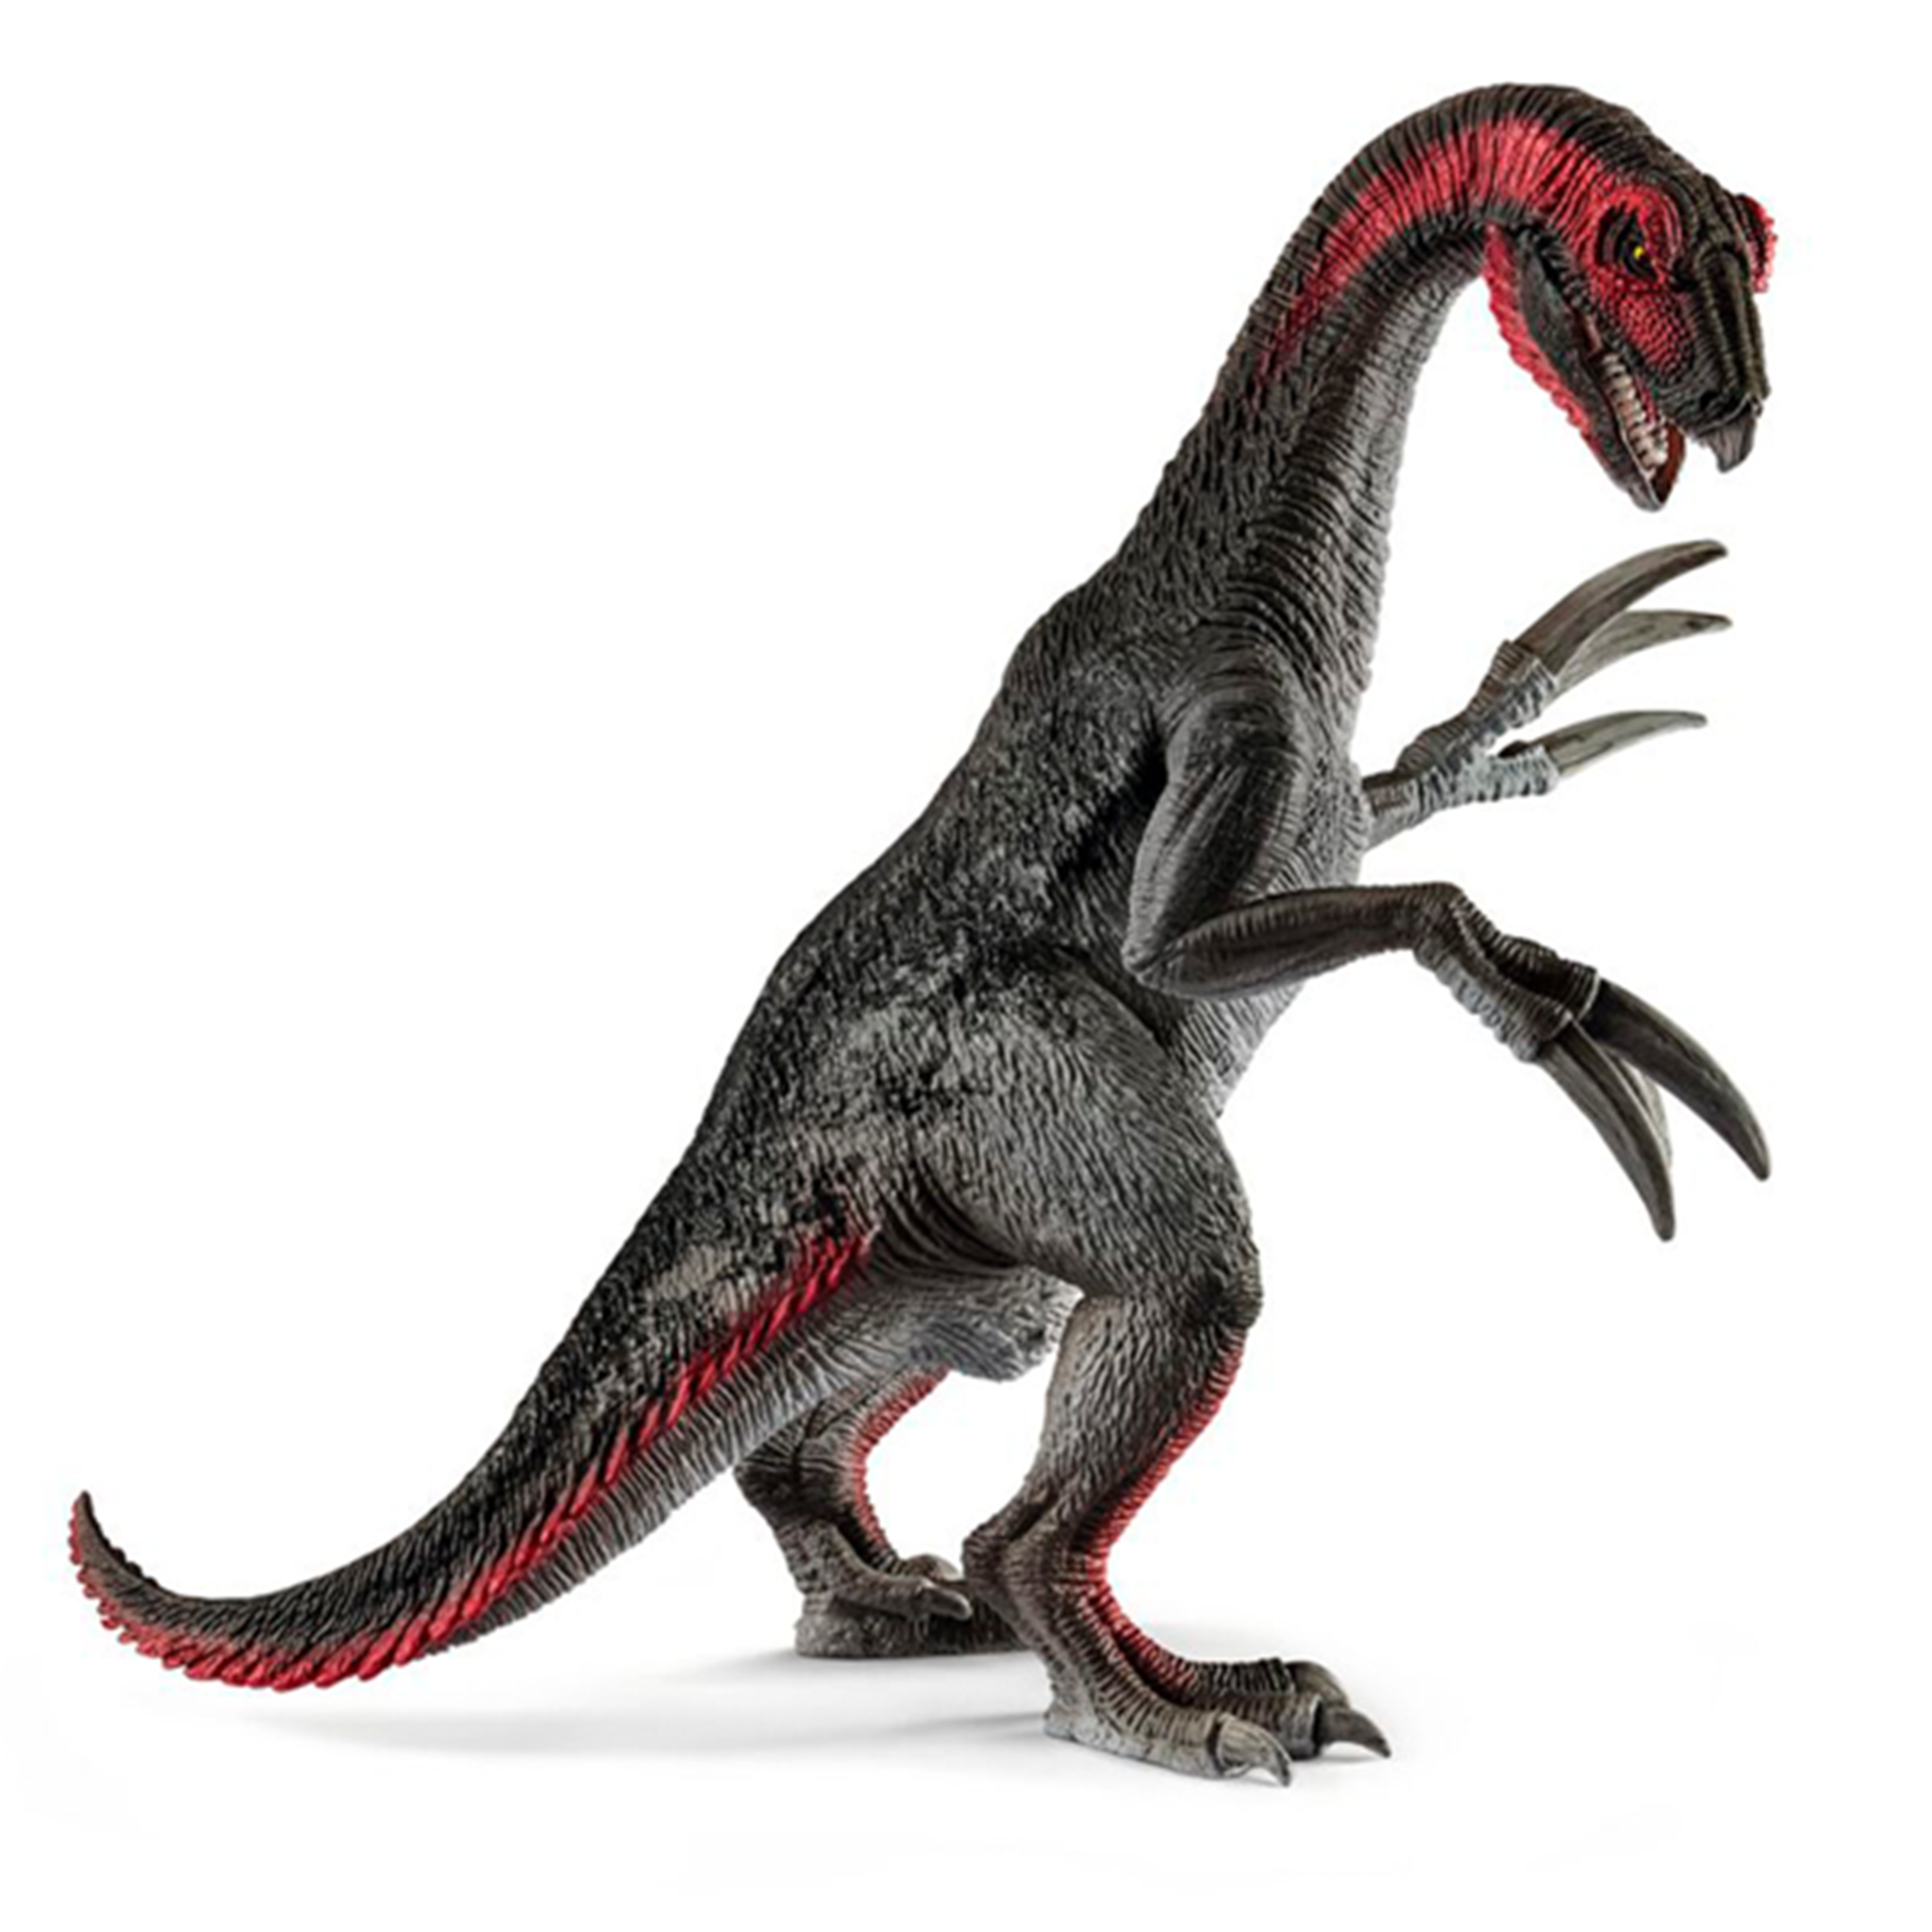 Schleich Dinosaurs Therizinosaurus